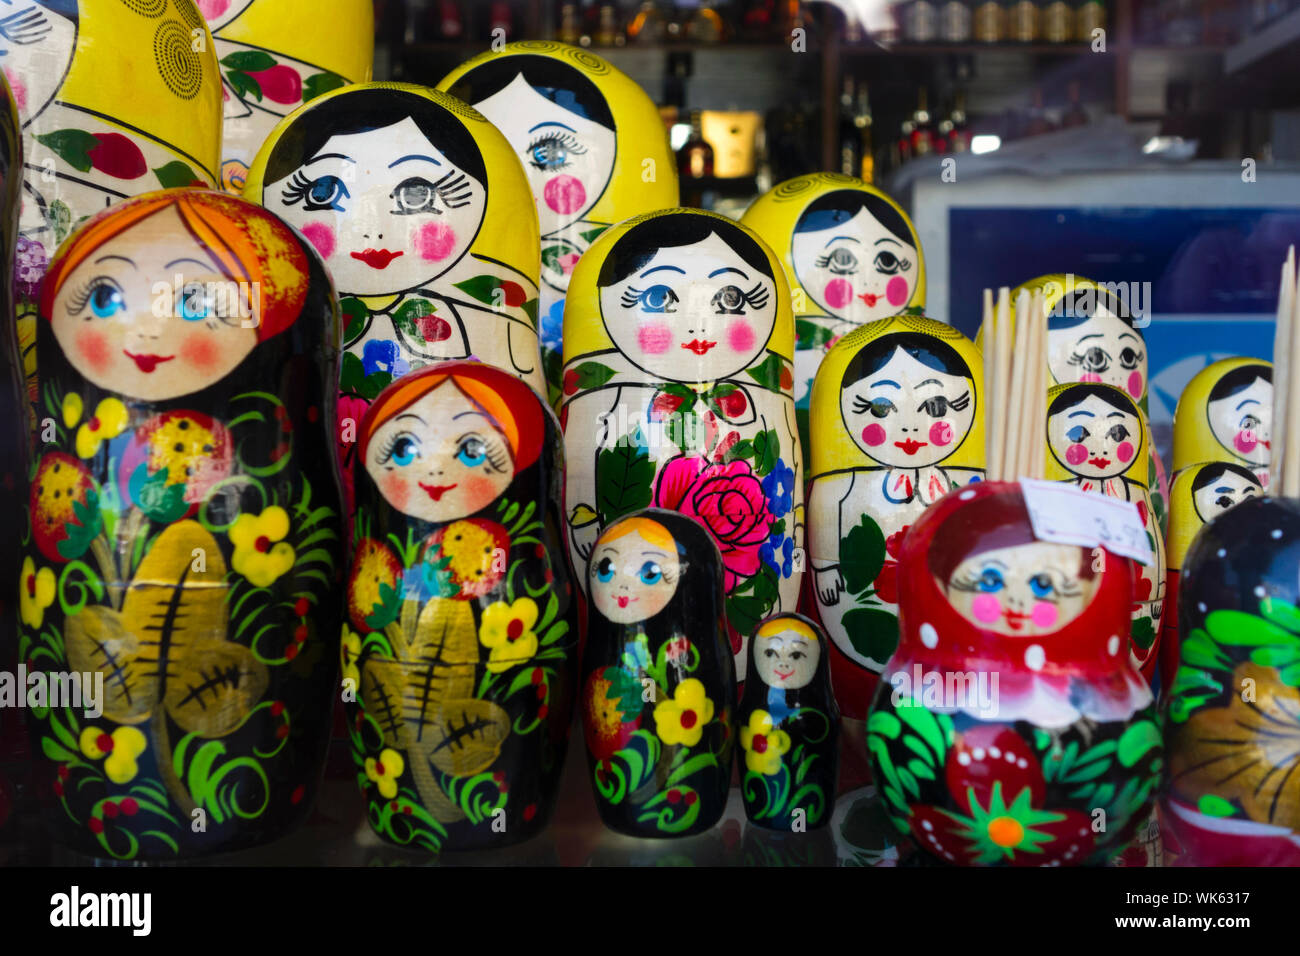 russian dolls ireland